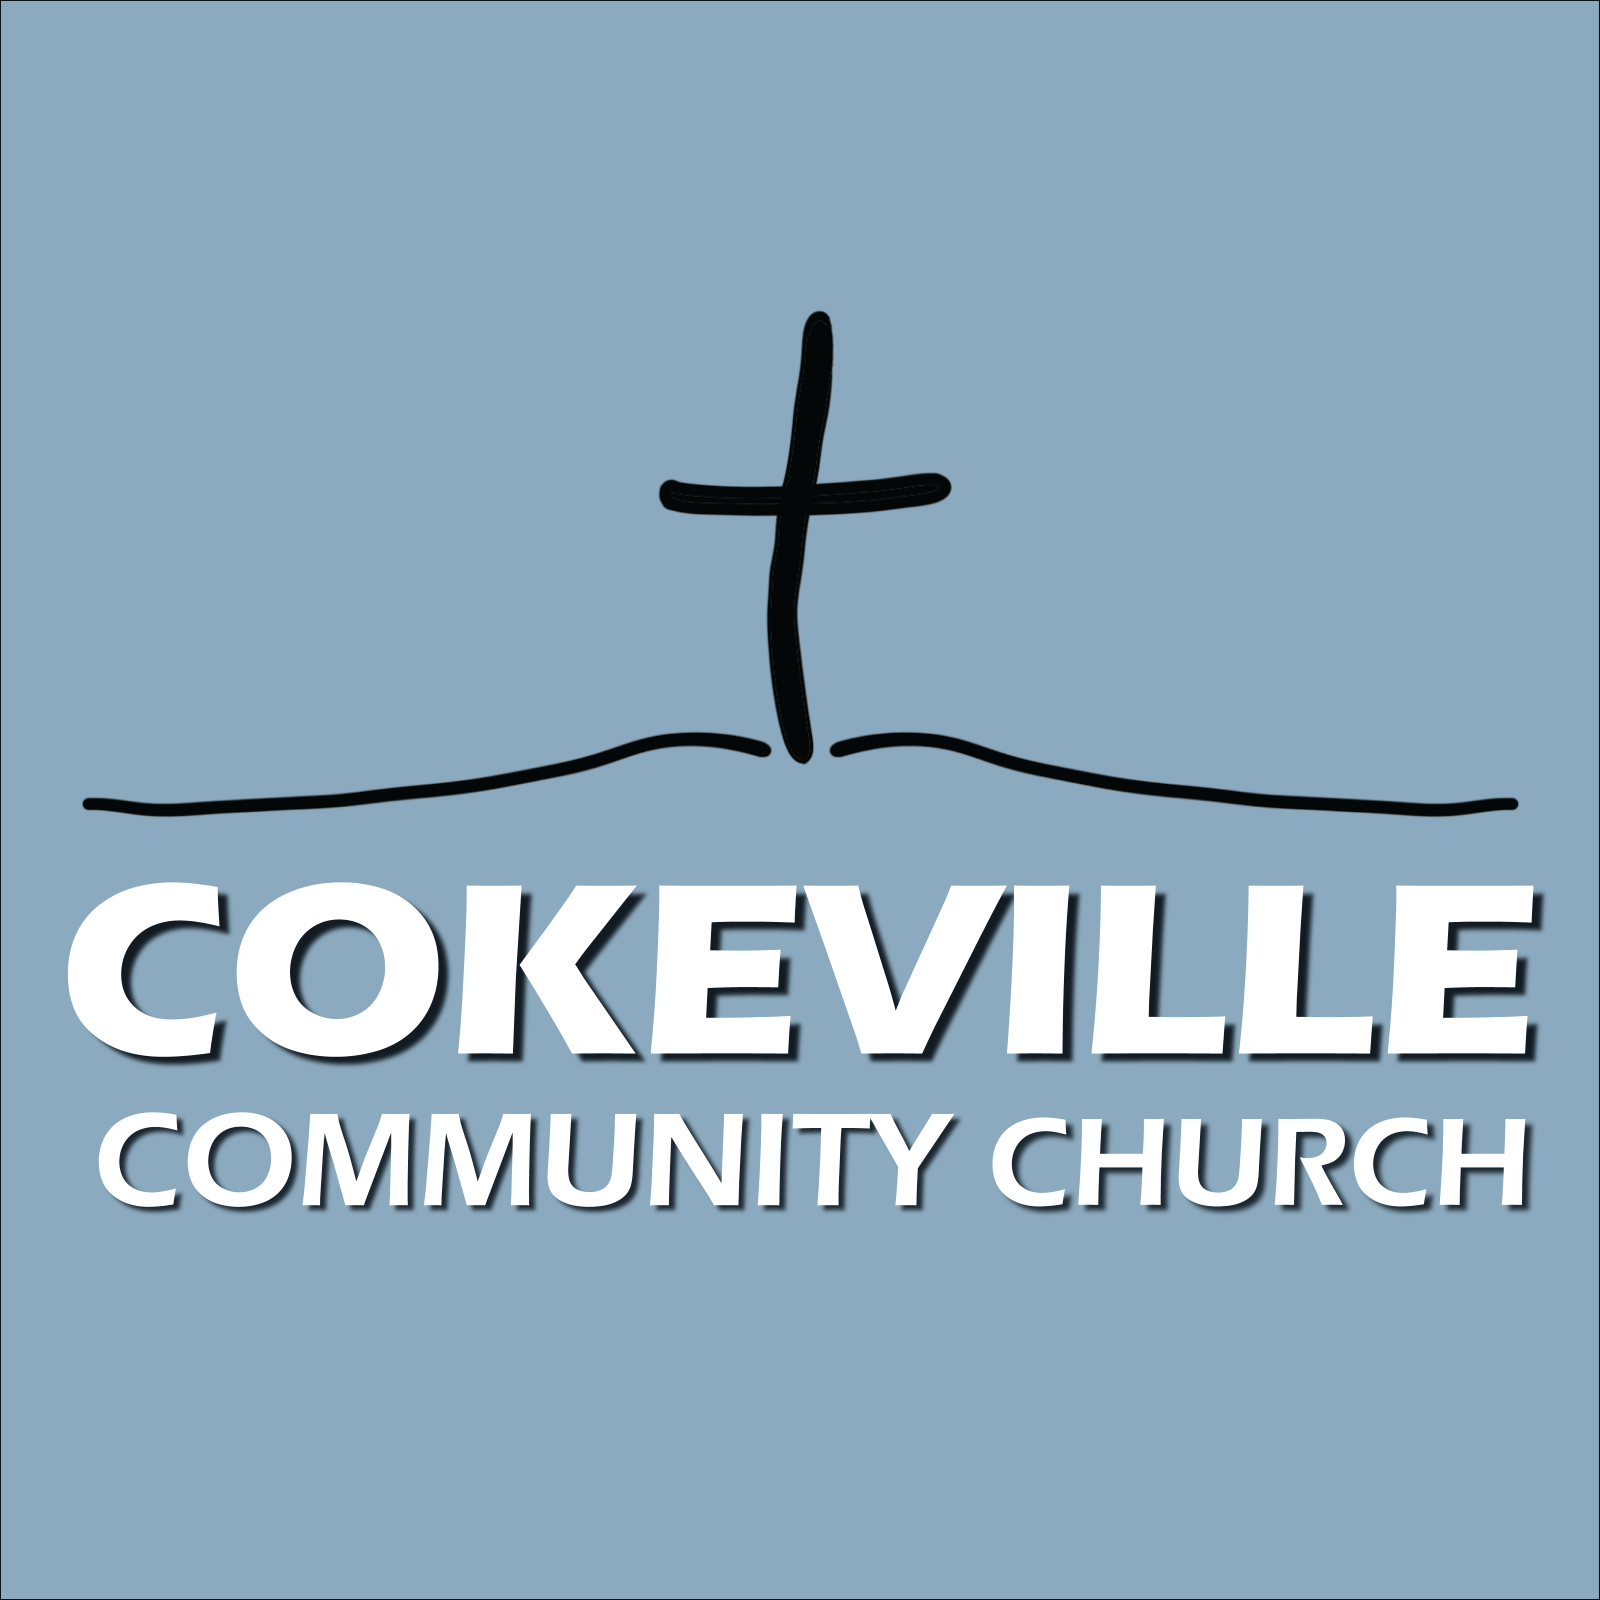 Cokeville Community Church